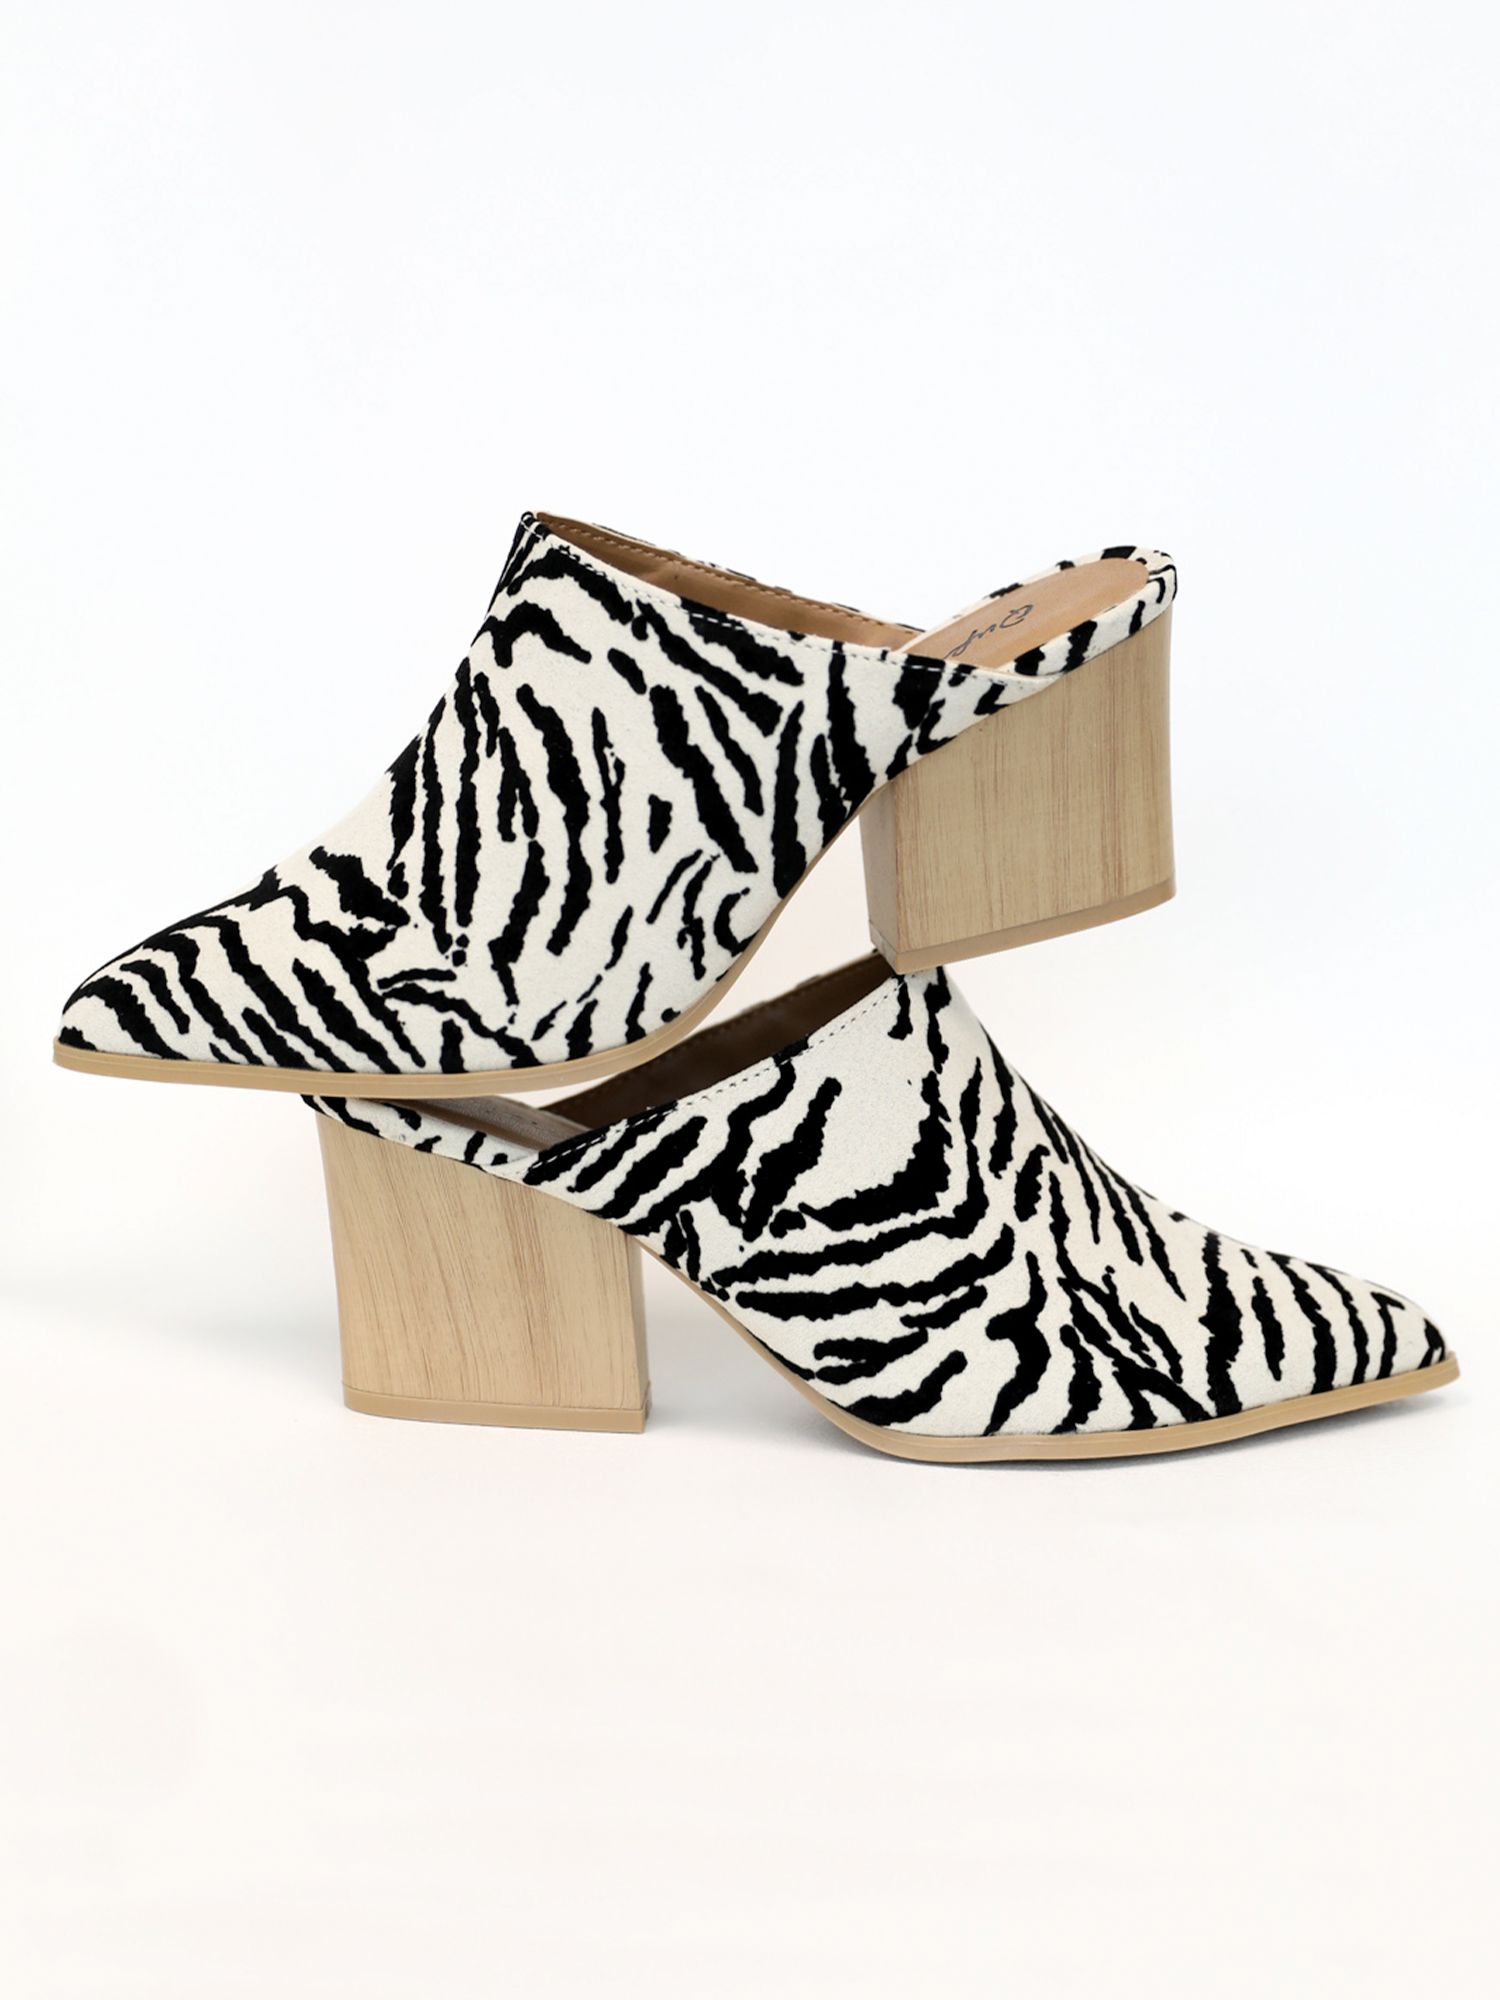 zebra mules shoes